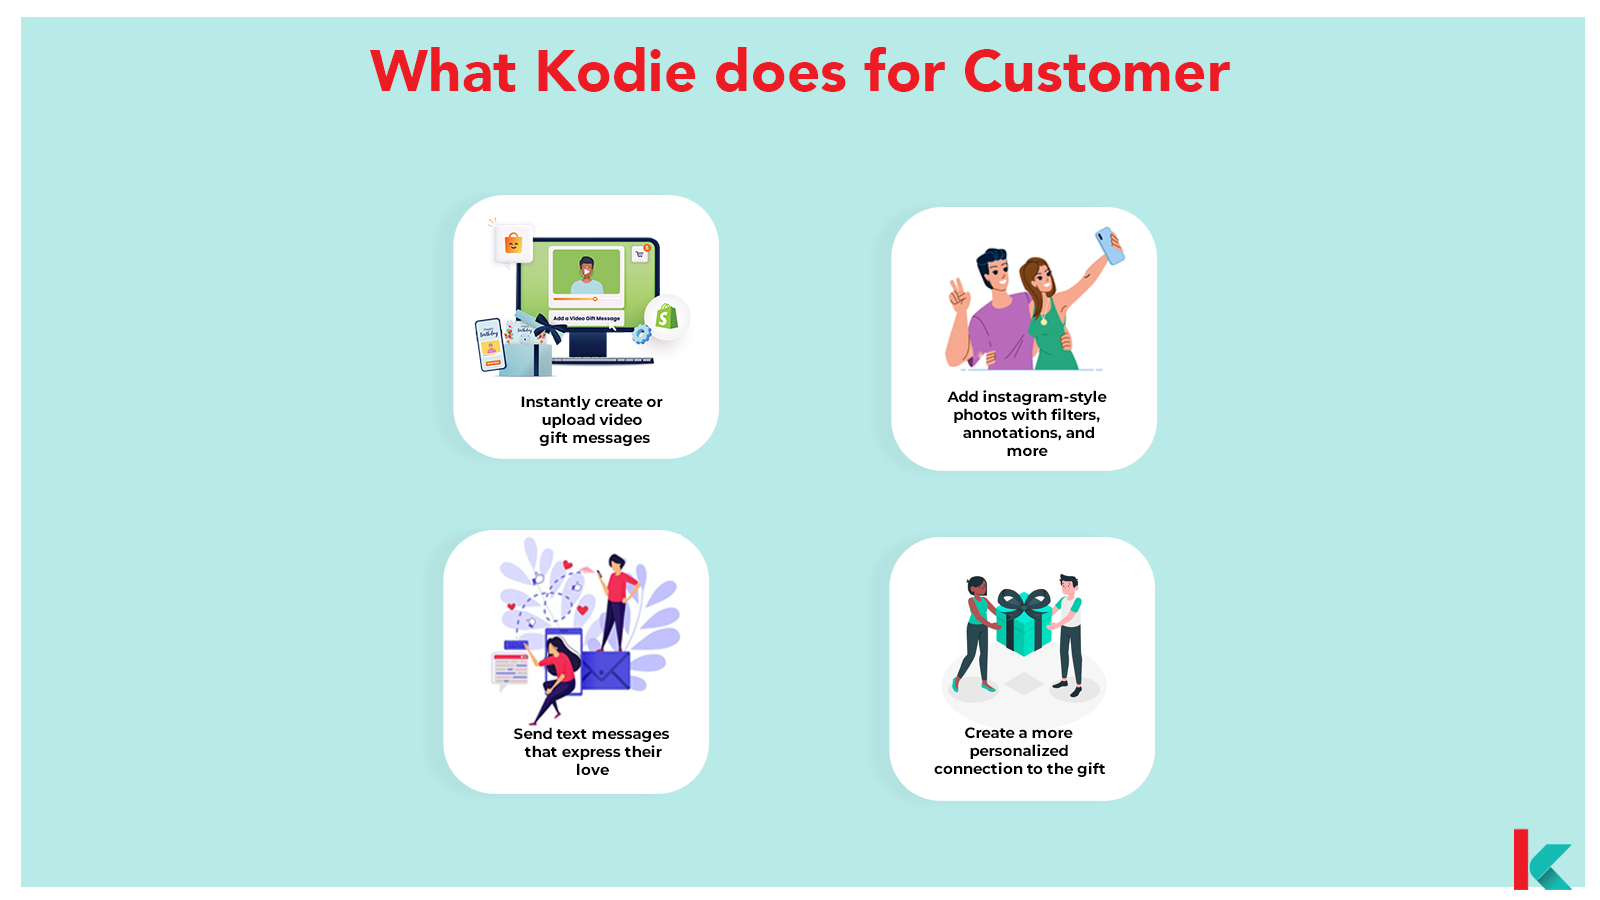 Kodie - Benefits to customers